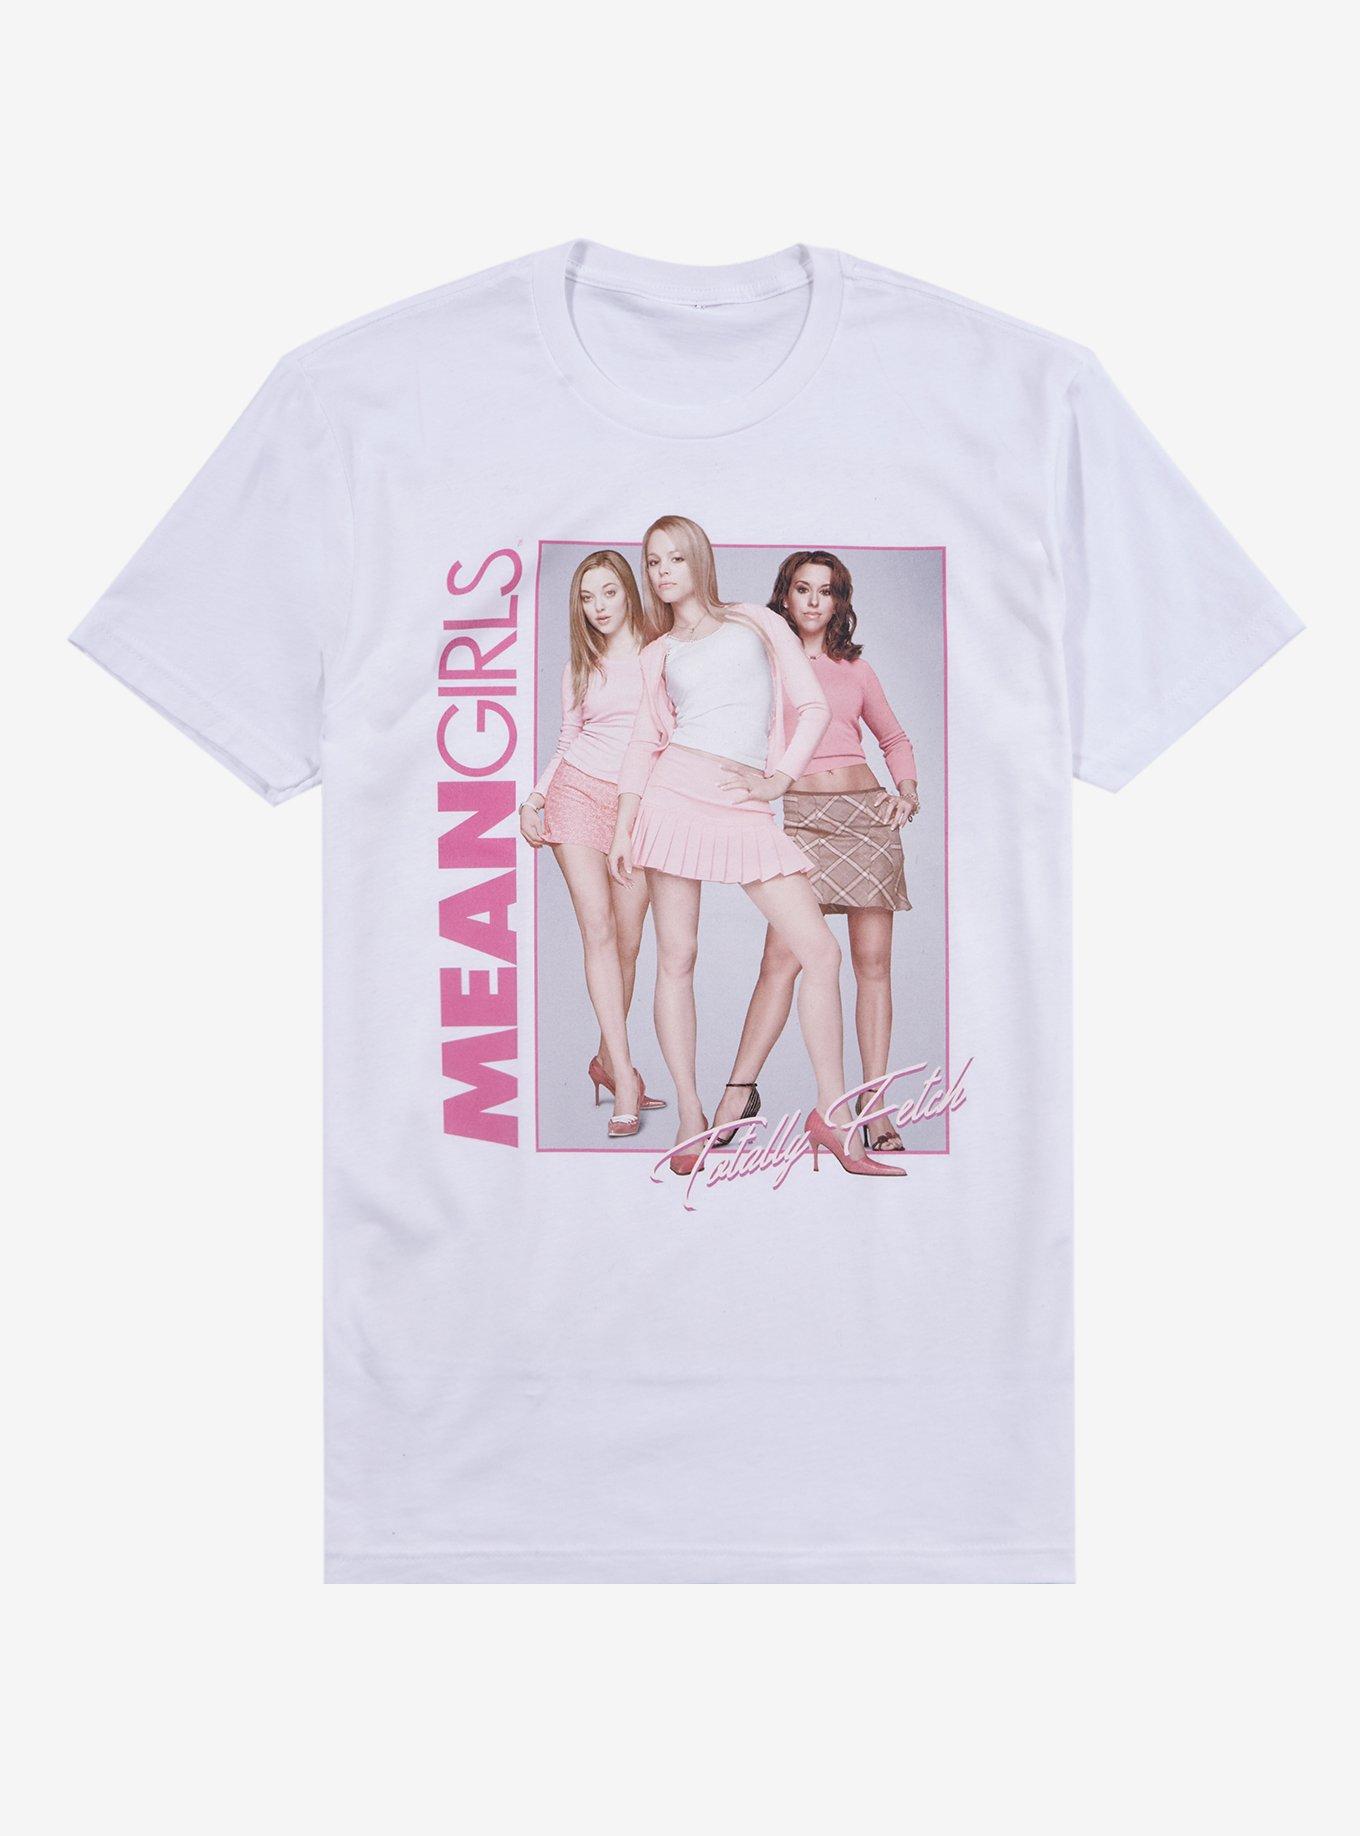 Mean Girls Plastics Boyfriend Fit Girls T-Shirt, MULTI, hi-res